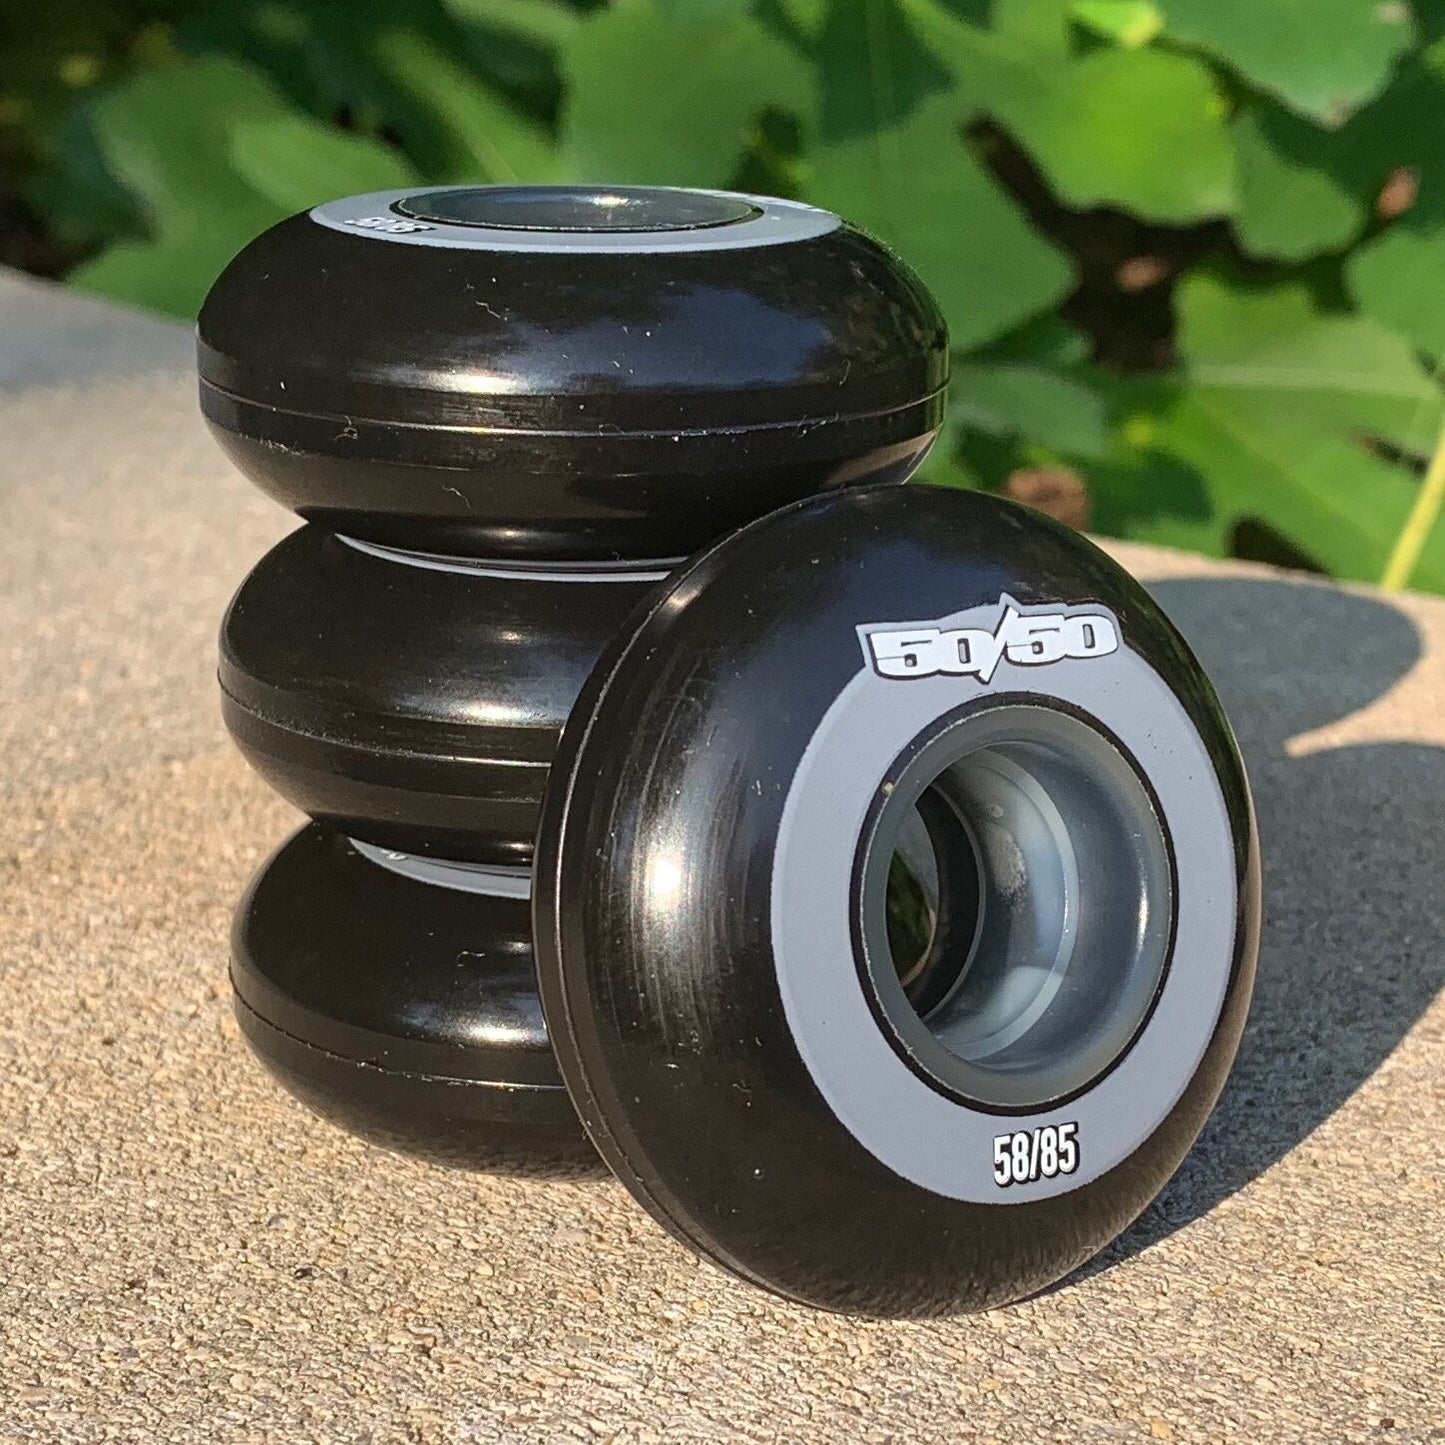 50/50 58mm 85a inline skate wheels